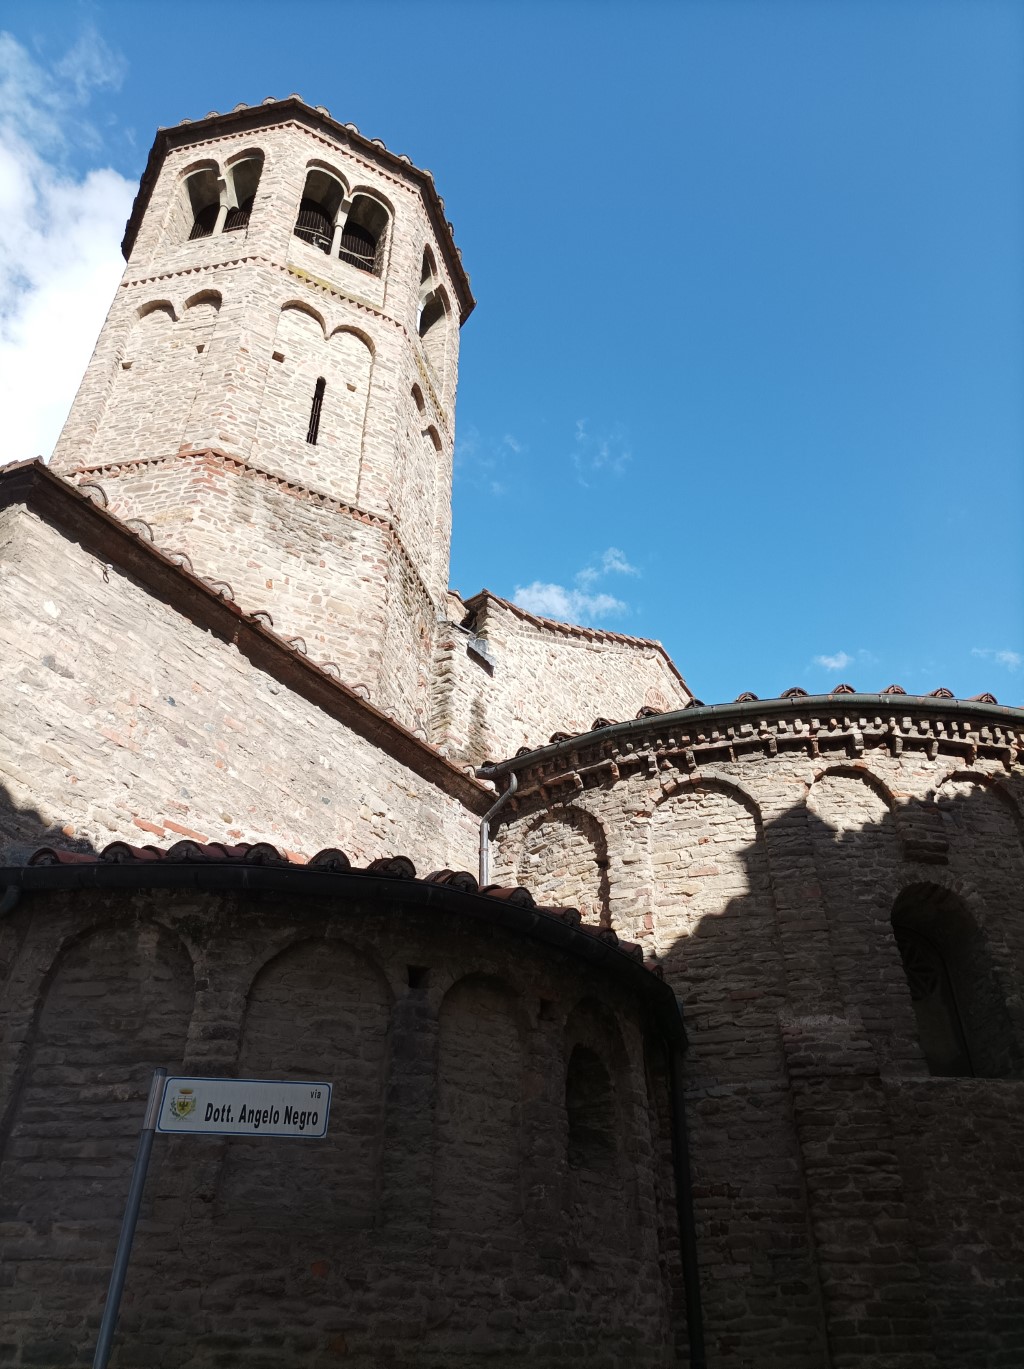 Acqui Terme - BASILICA O CATTEDRALE DI SAN PIETRO-Abside e campanile